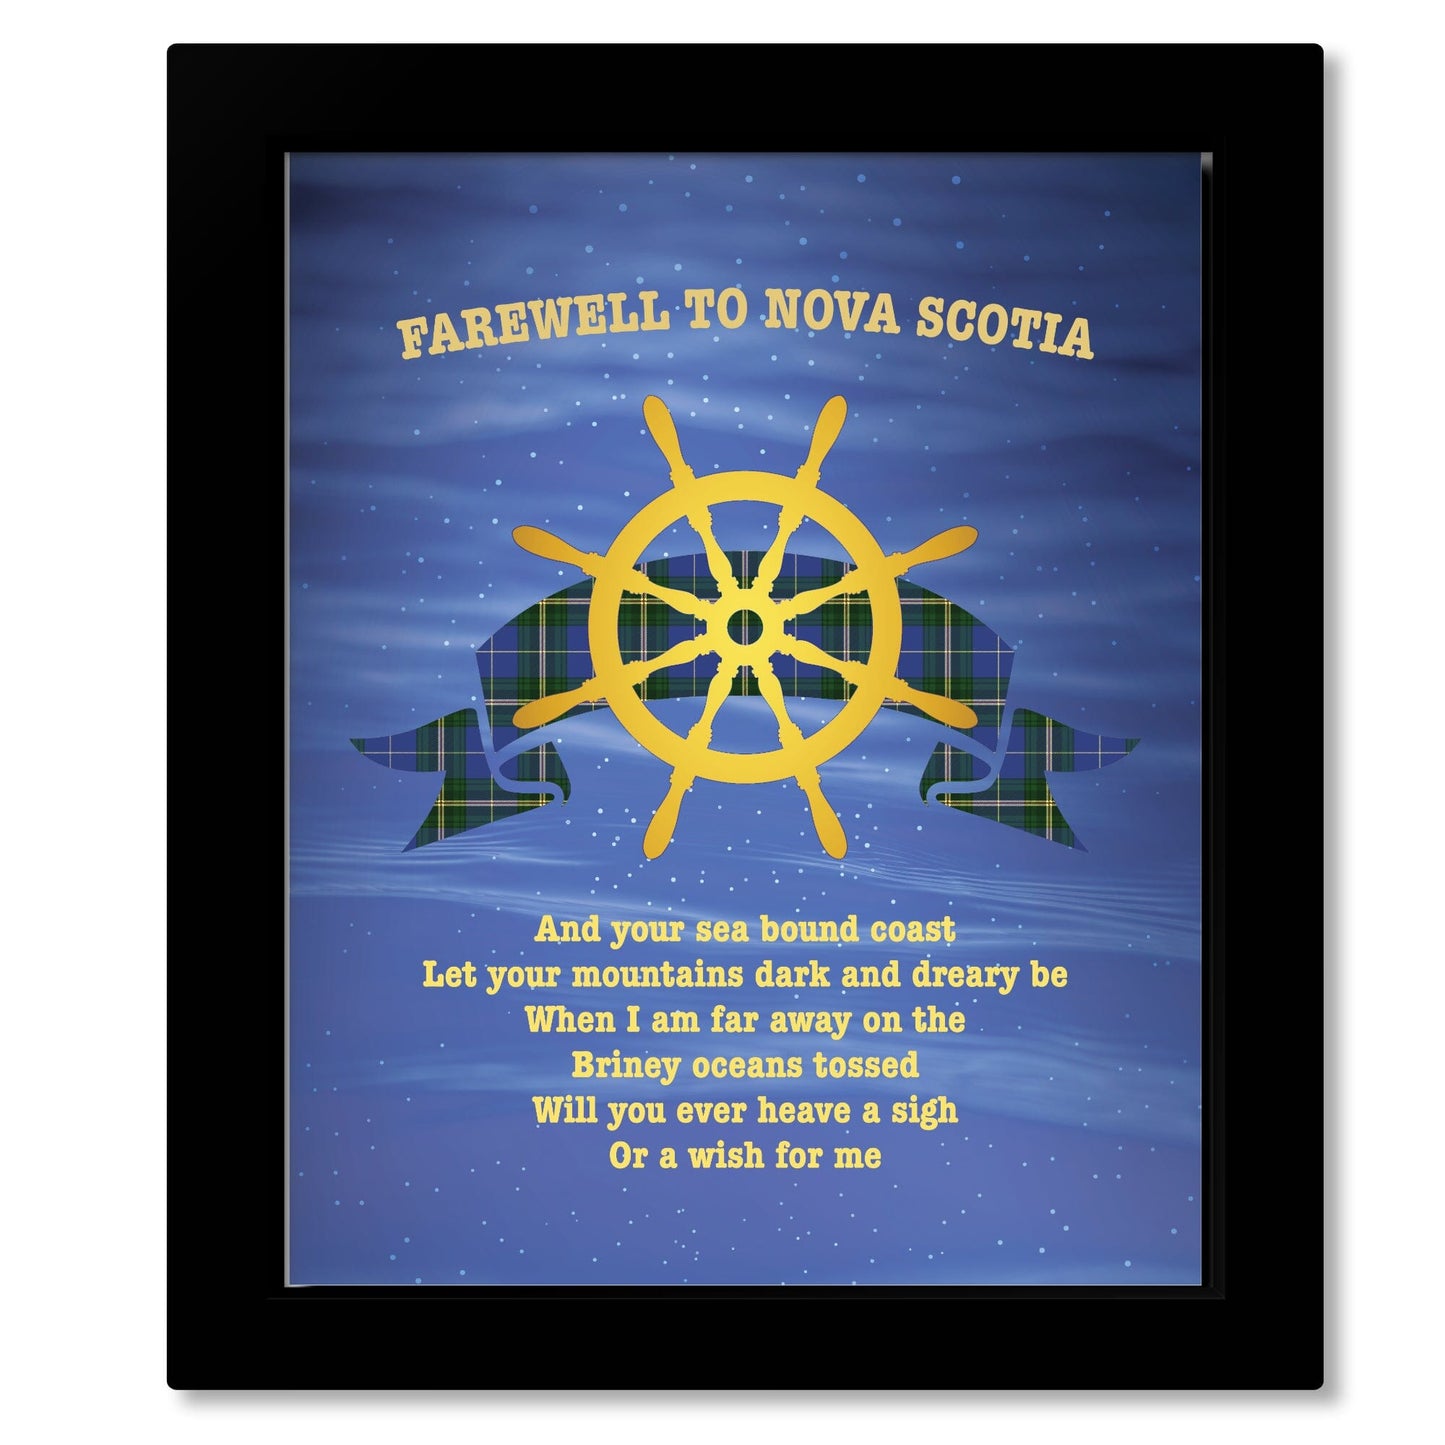 Farewell to Nova Scotia by the Irish Rovers - Wall Art Print Song Lyrics Art Song Lyrics Art Framed 8x10 Print (without mat) 